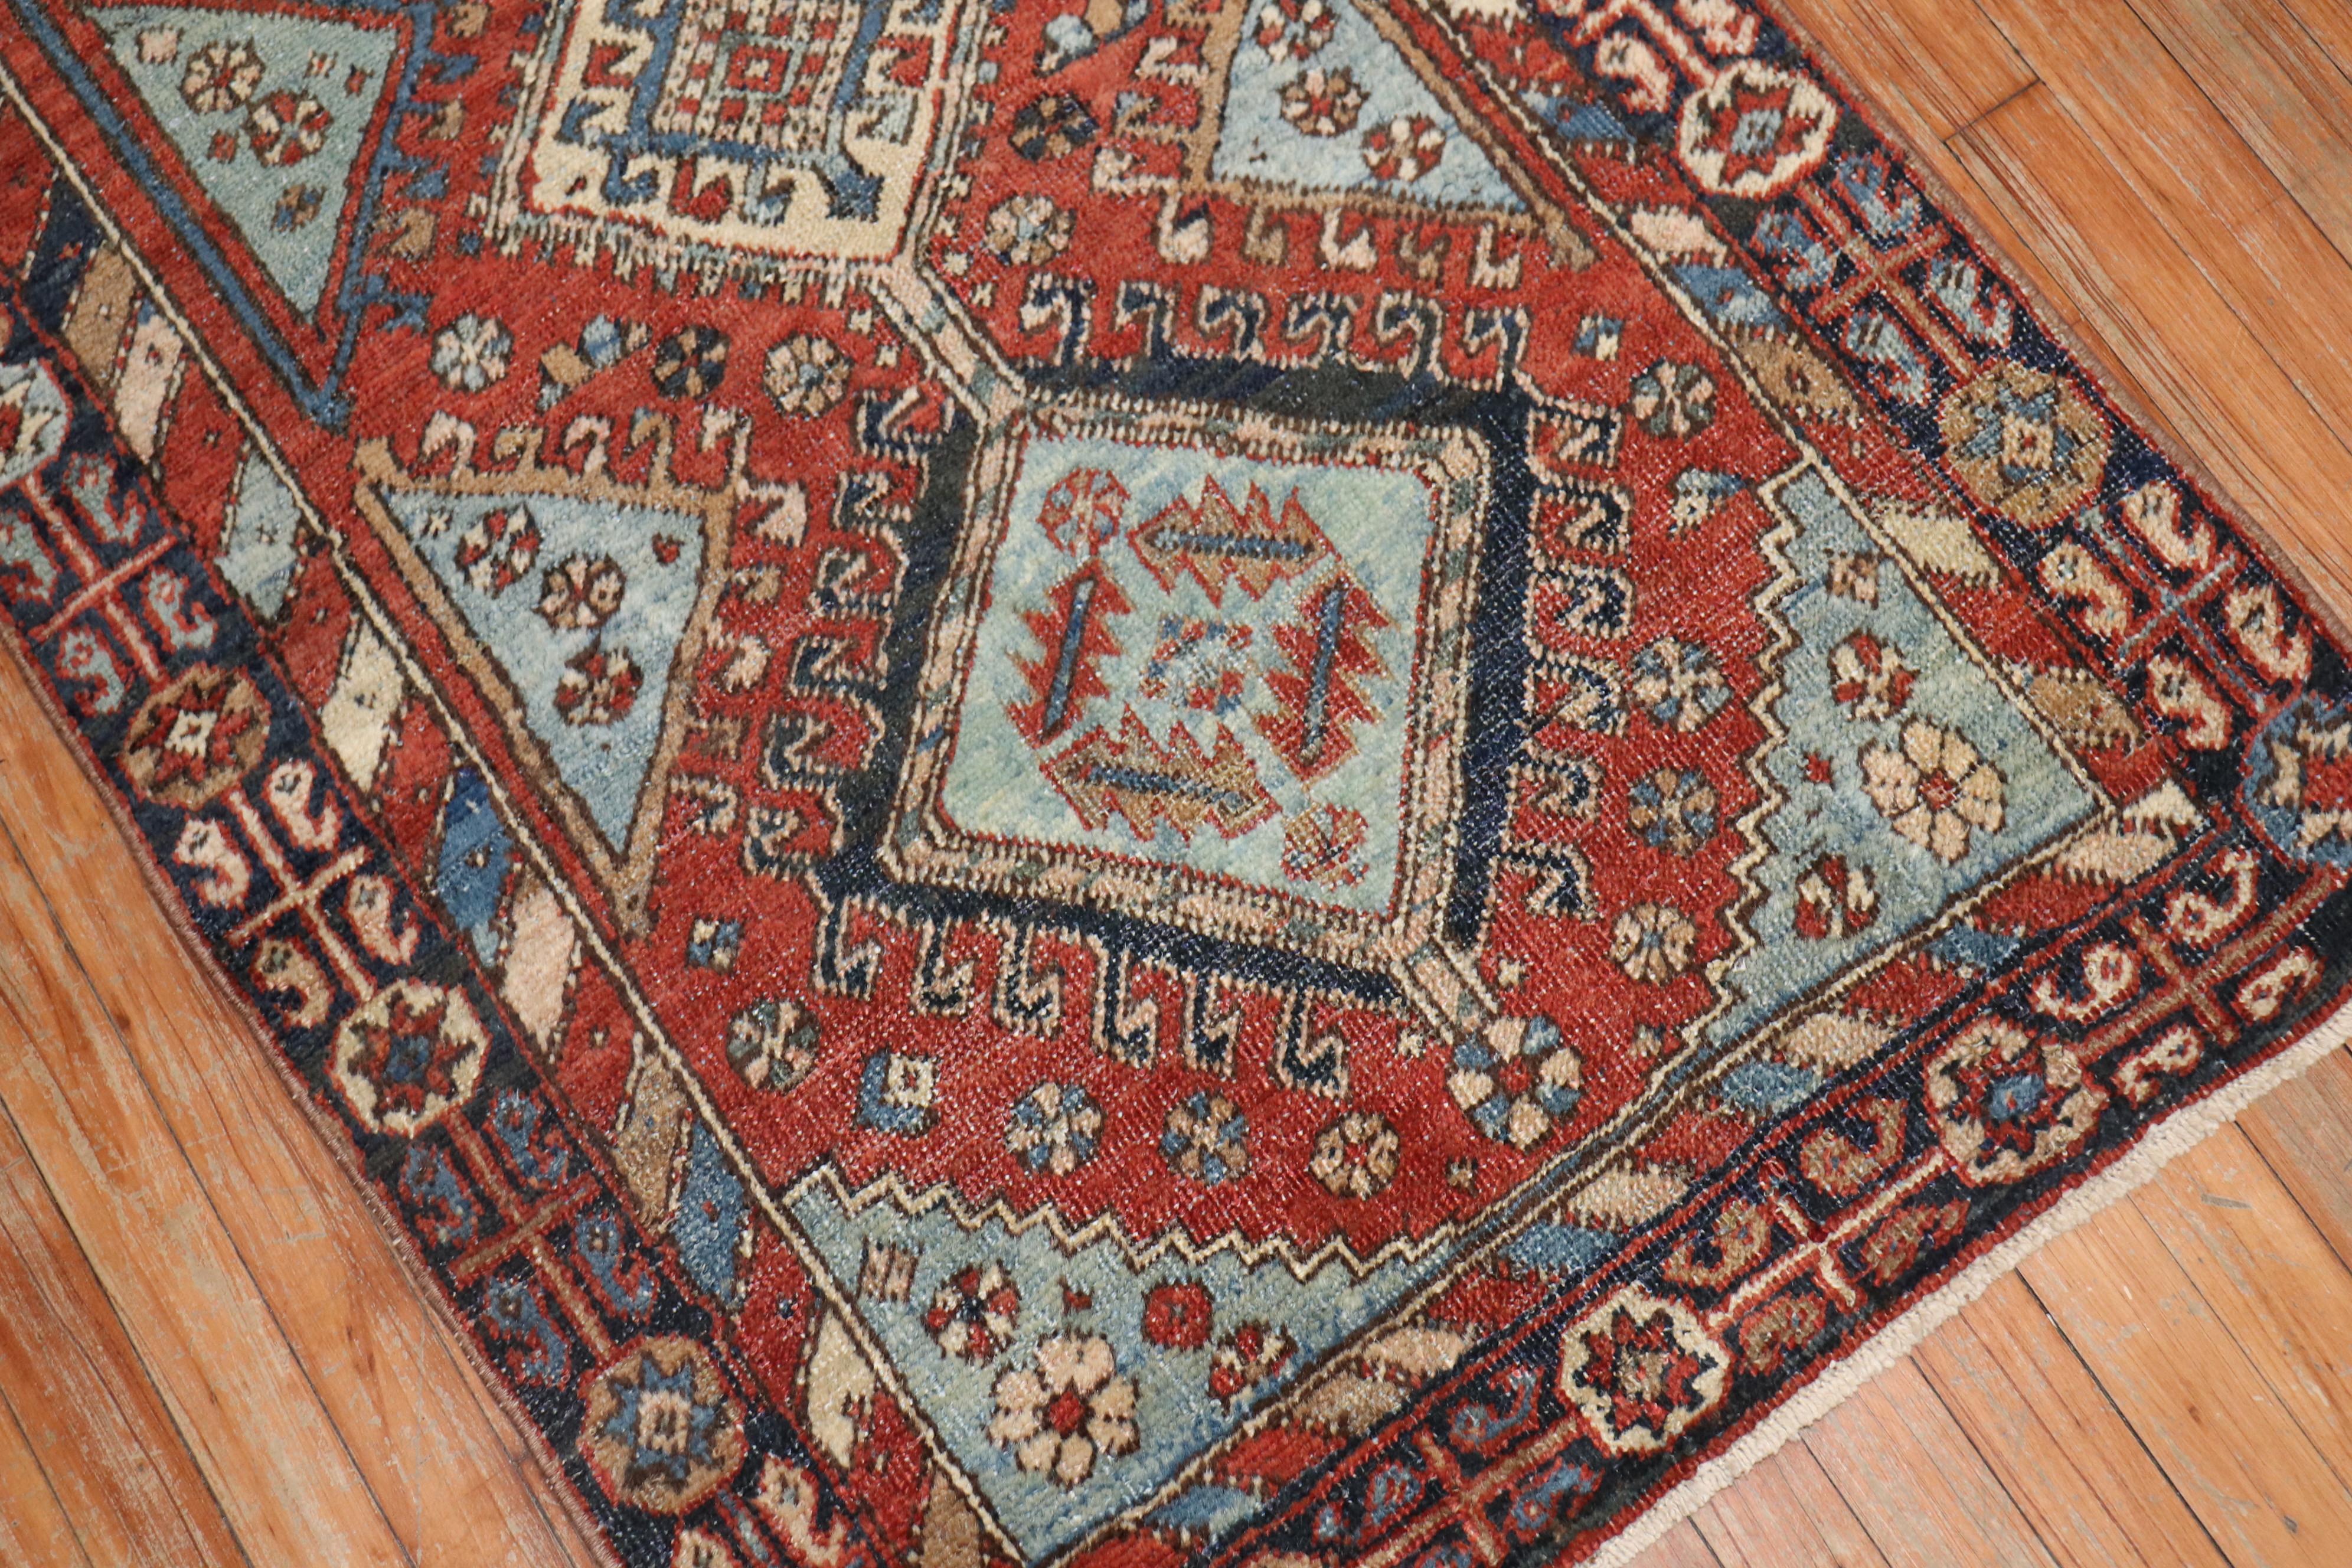 Persian Heriz Tribal scatter rug in rustic tones.

Measures: 2'10” x 5'5”.